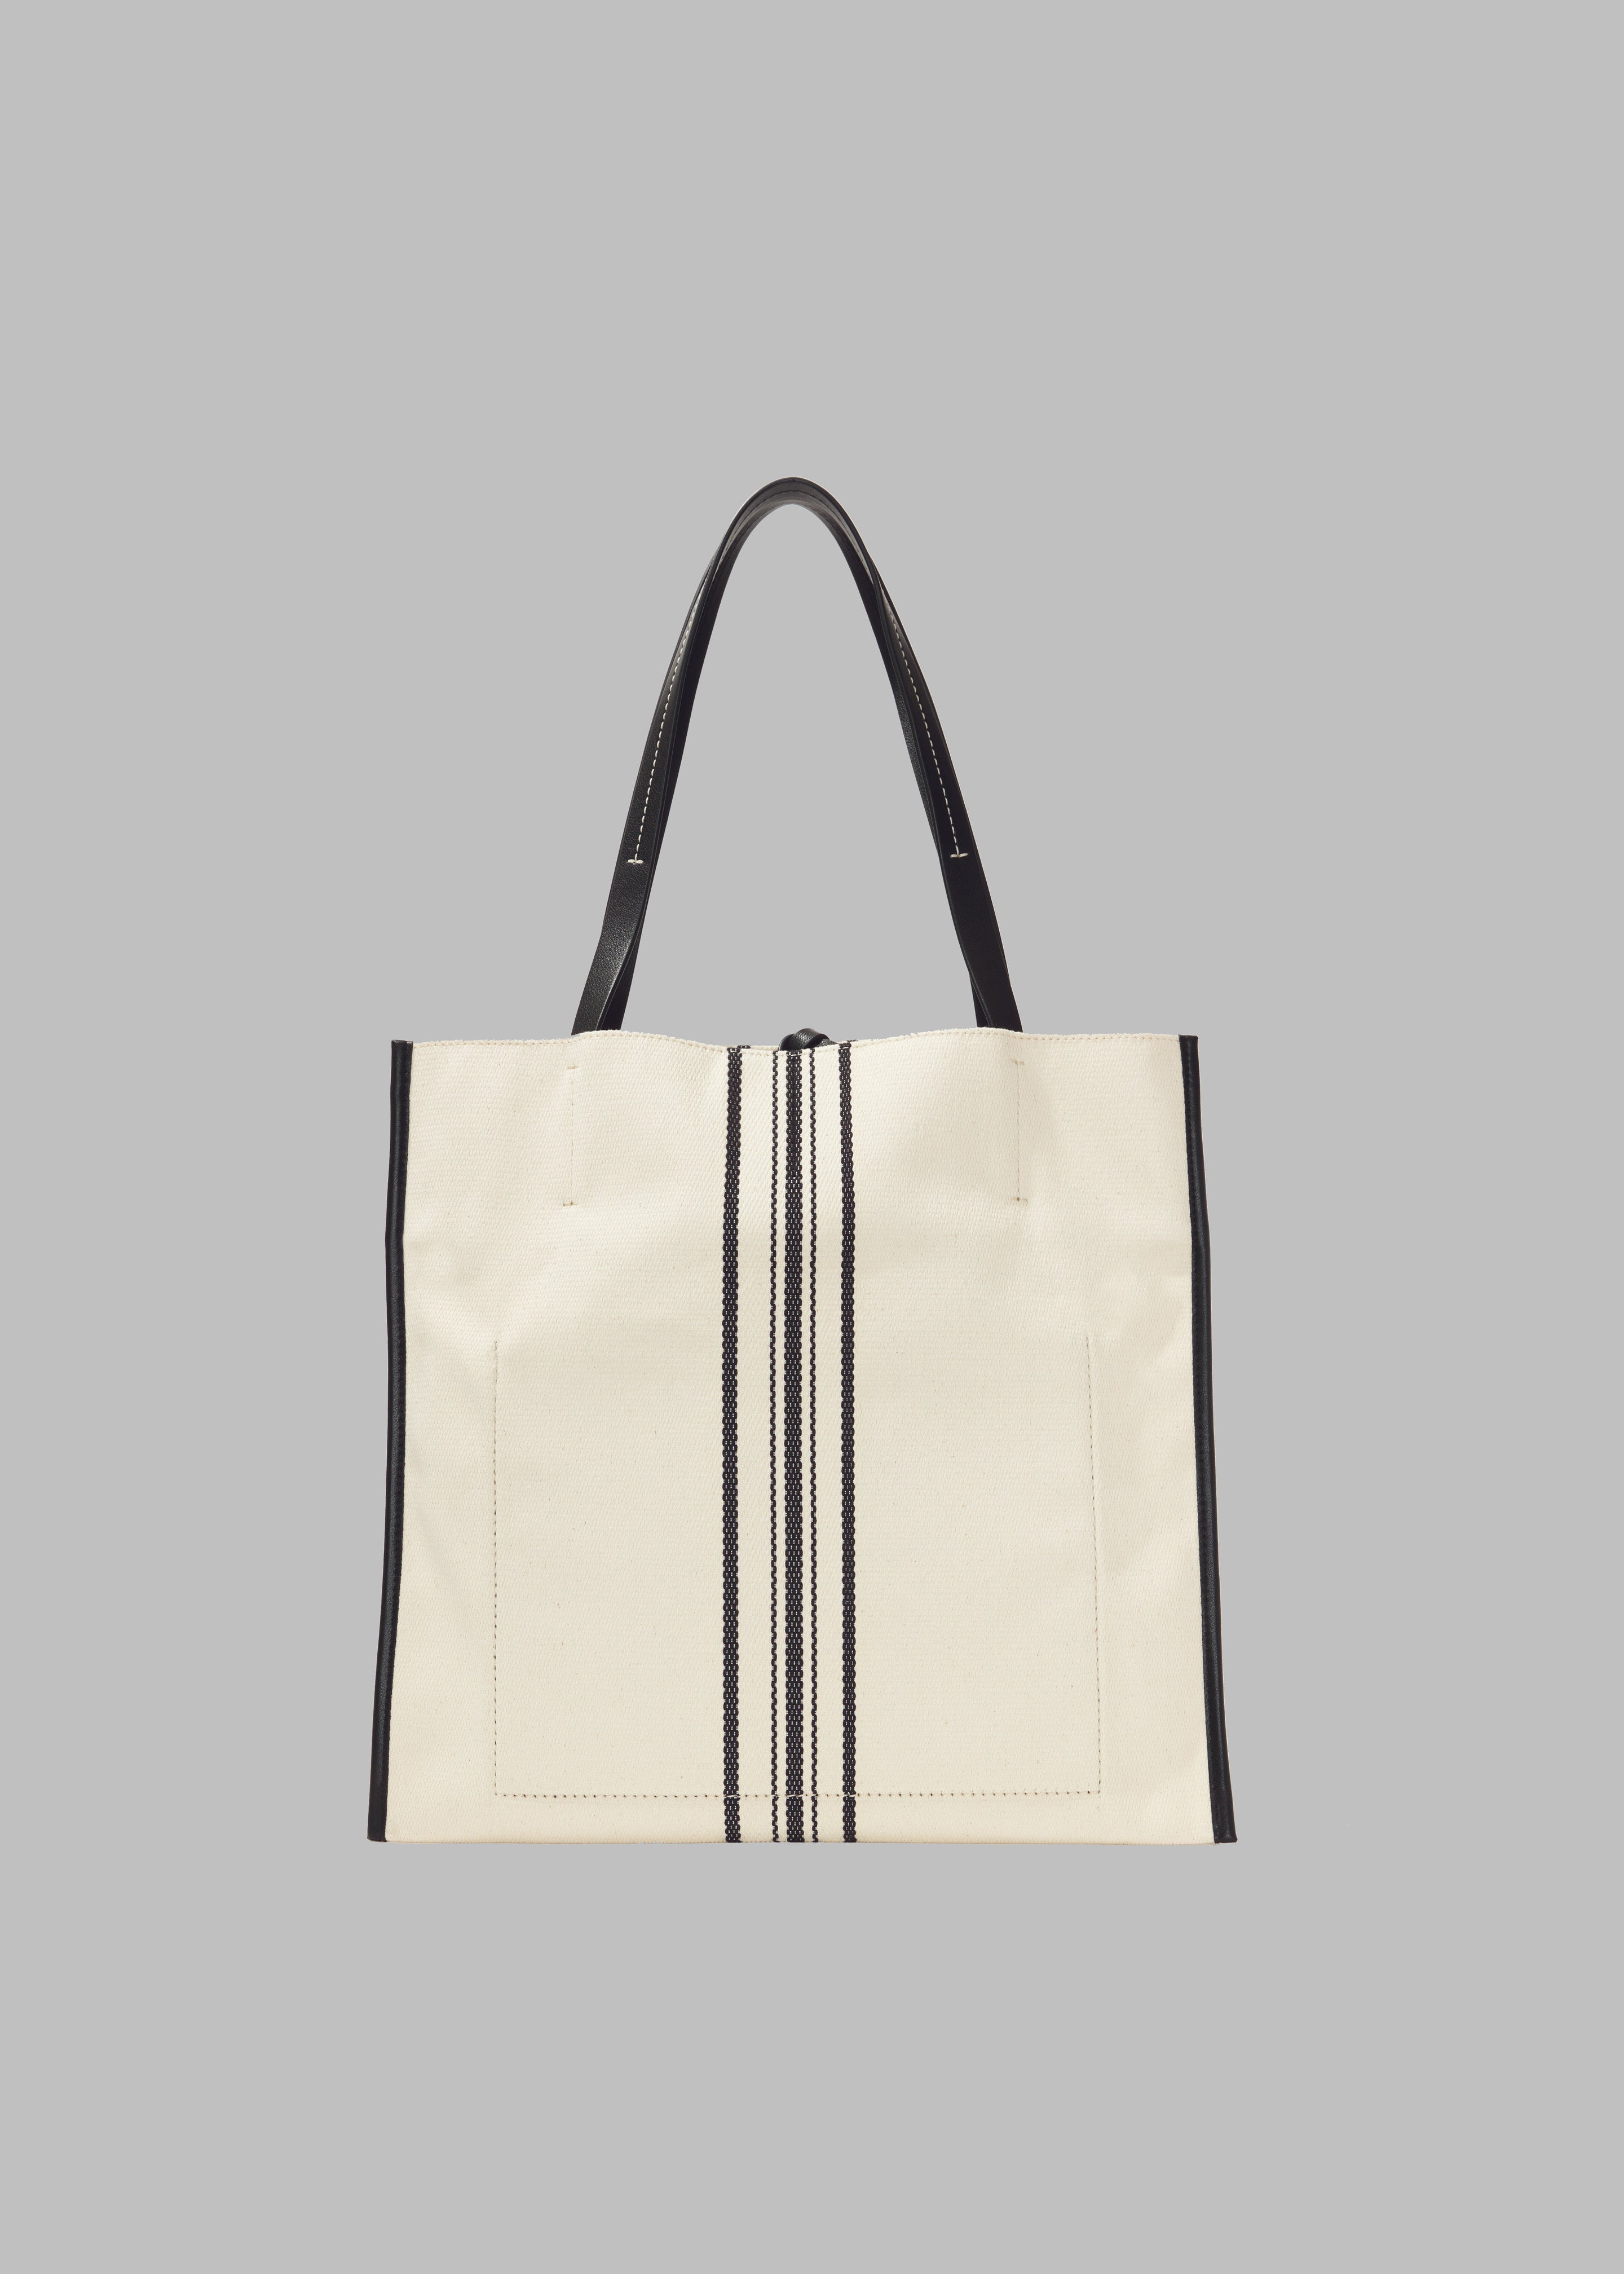 Proenza Schouler White Label Twin Tote Bag - Natural/Black - 7